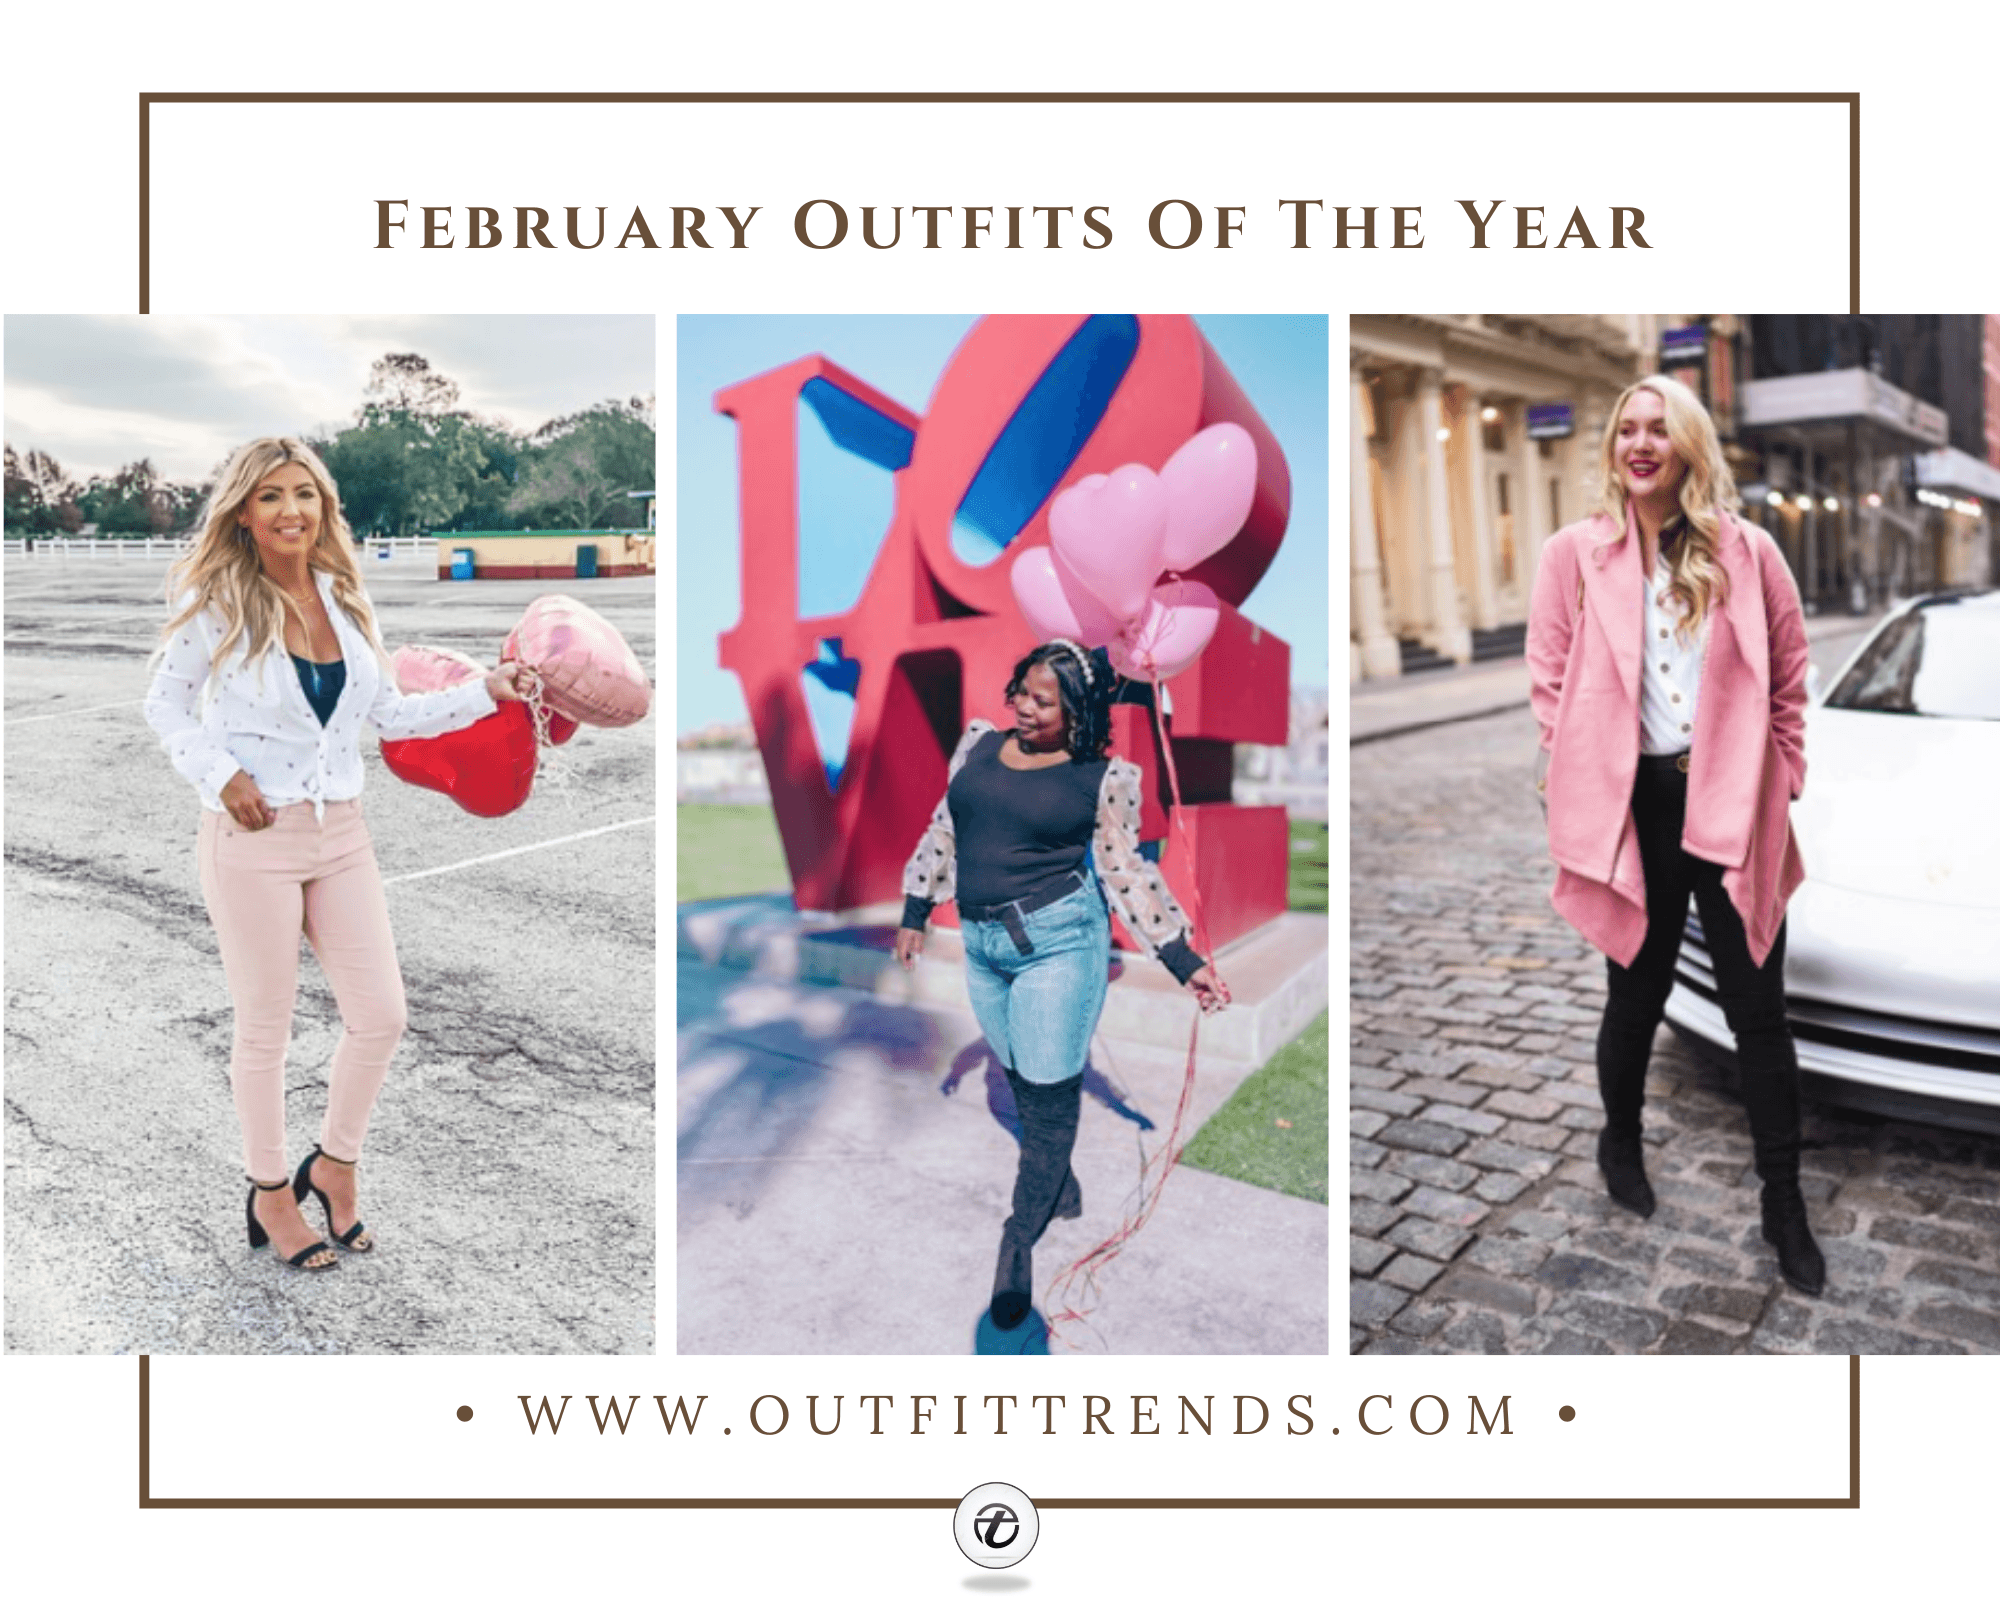 February 2021 Outfit Ideas For Women – 25 Feb Fashion Ideas